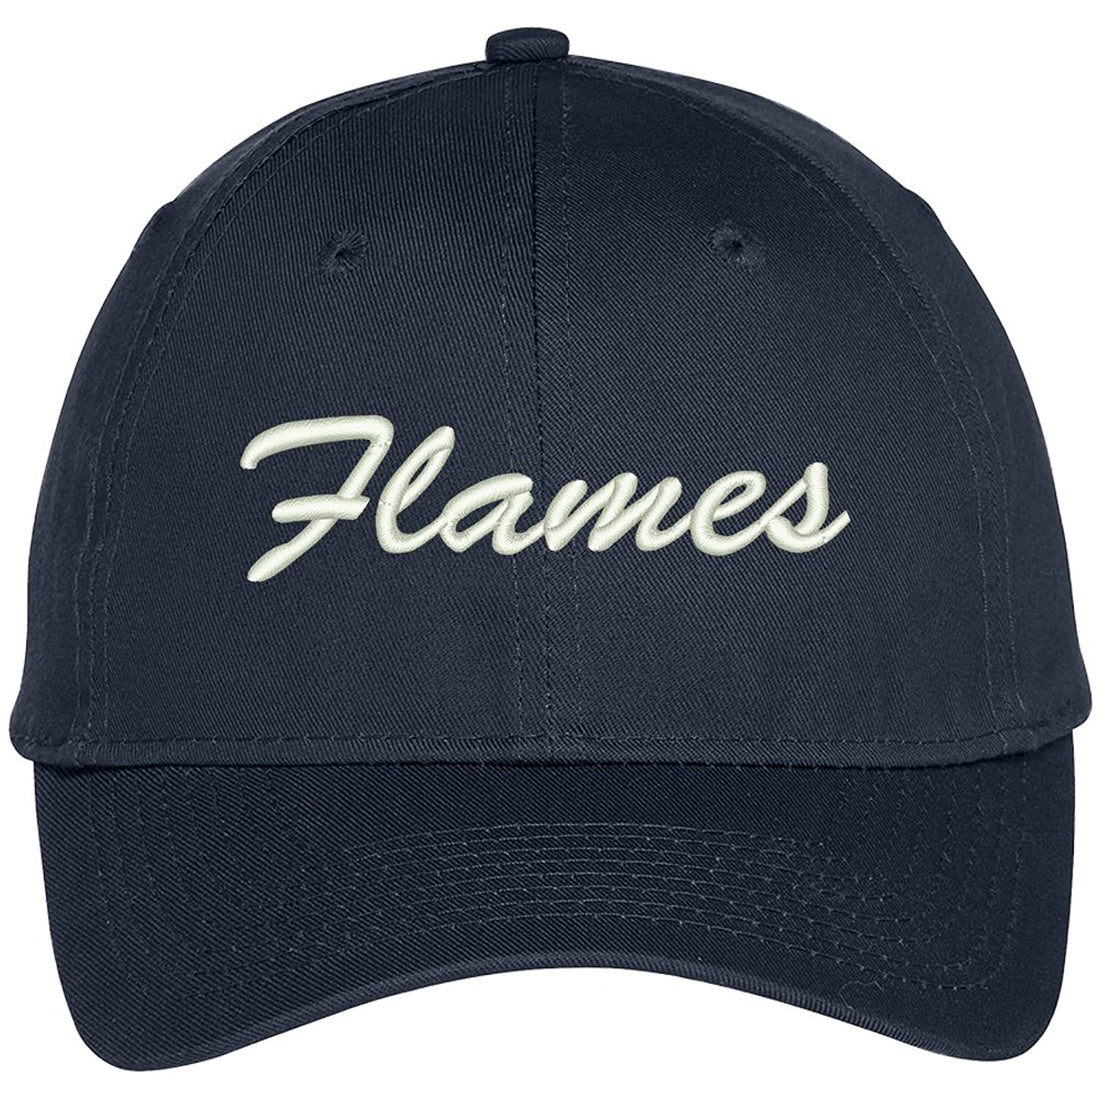 Trendy Apparel Shop Flames Embroidered Precurved Adjustable Cap